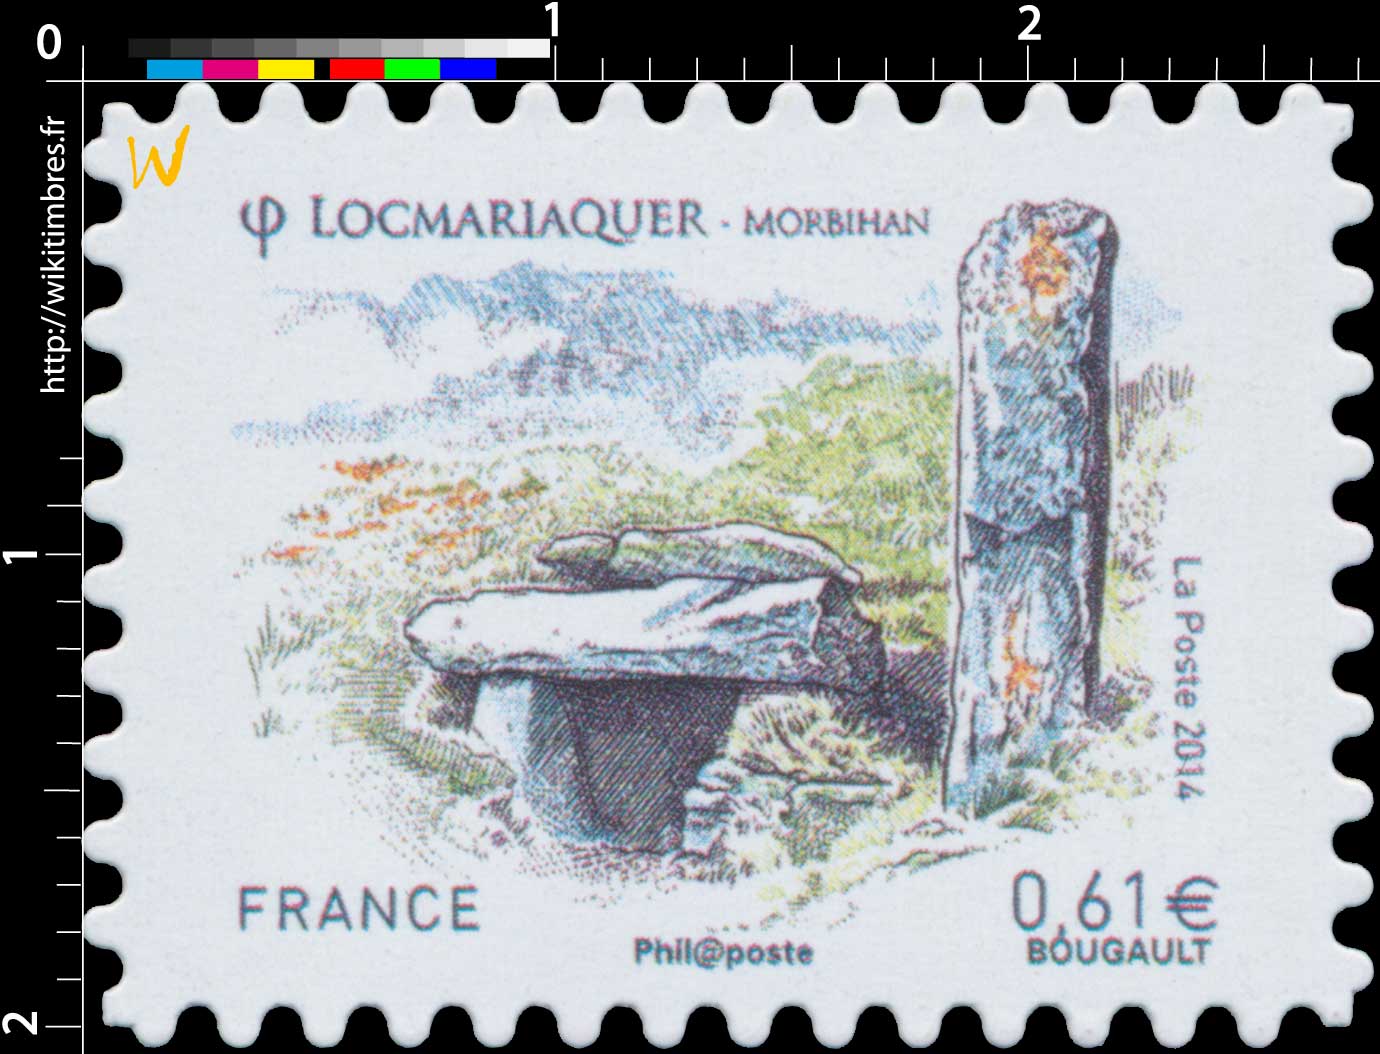 2014 Locmariaquer - Morbihan